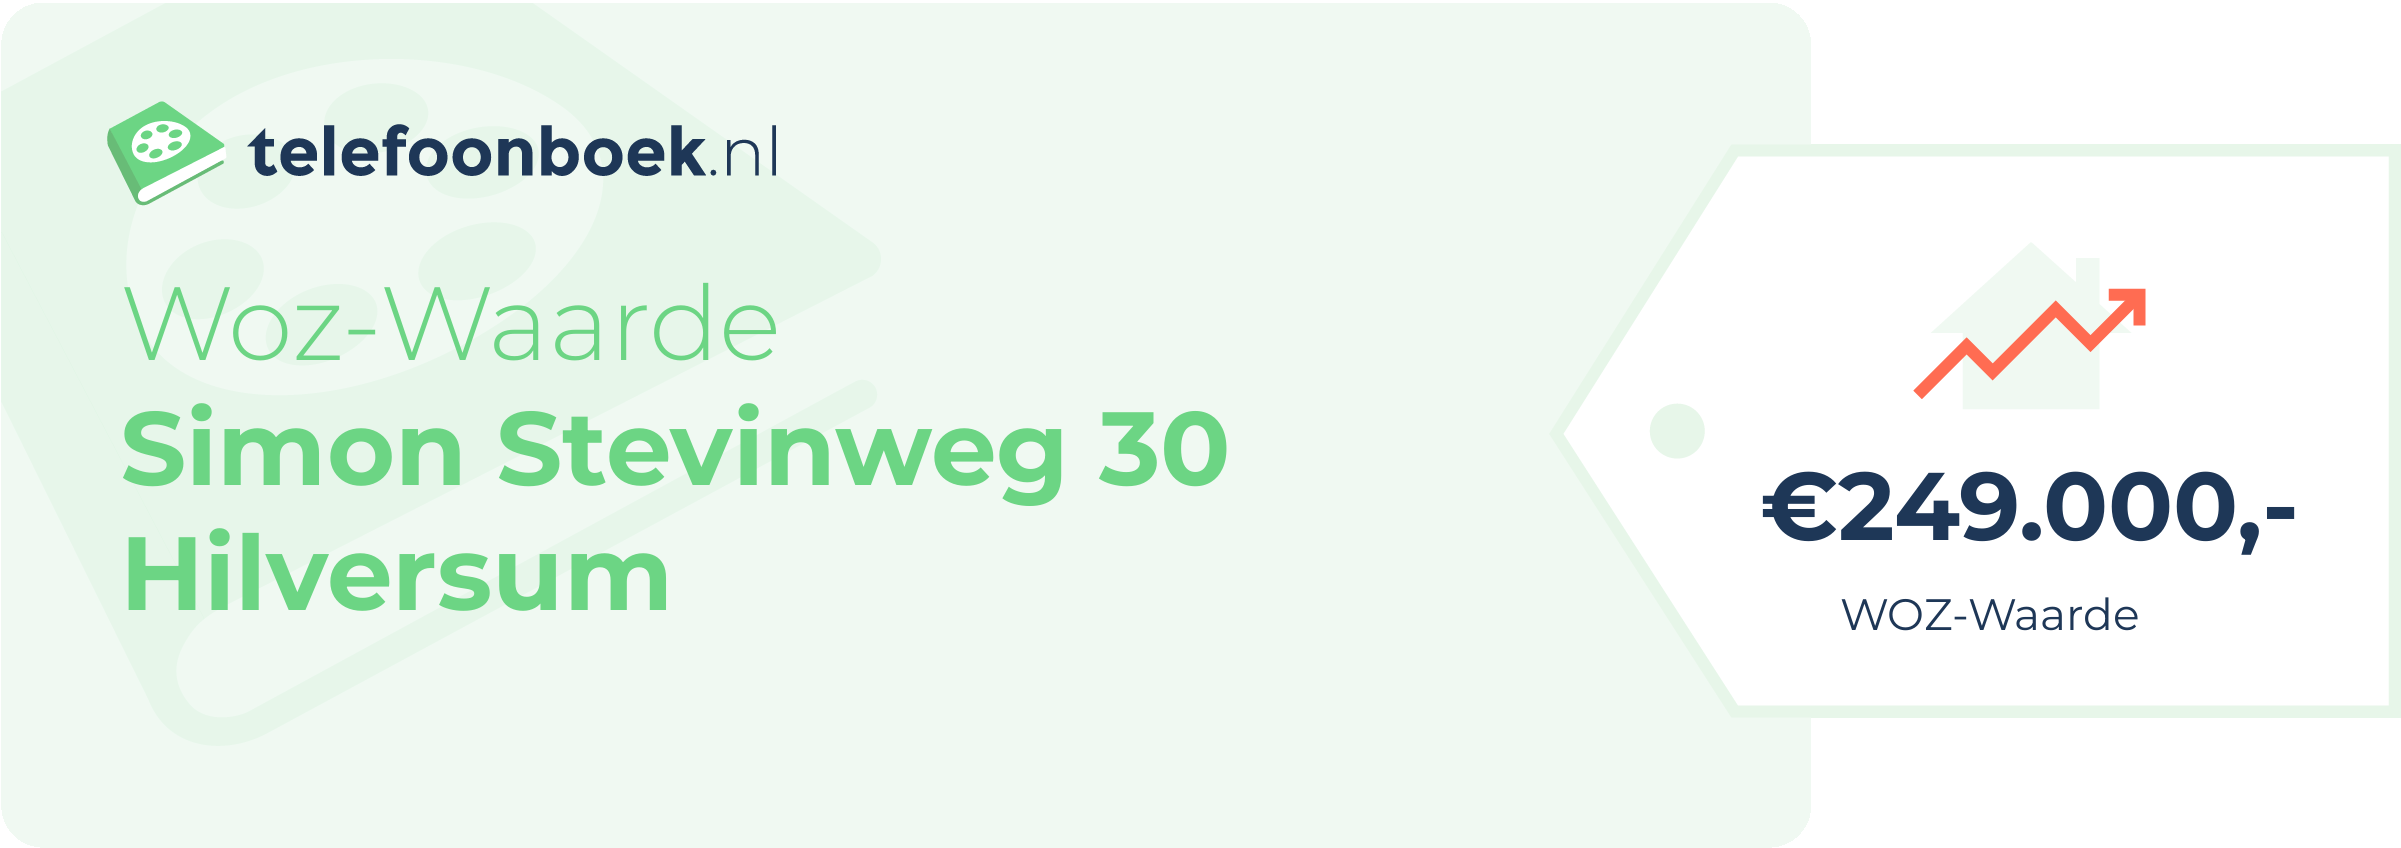 WOZ-waarde Simon Stevinweg 30 Hilversum